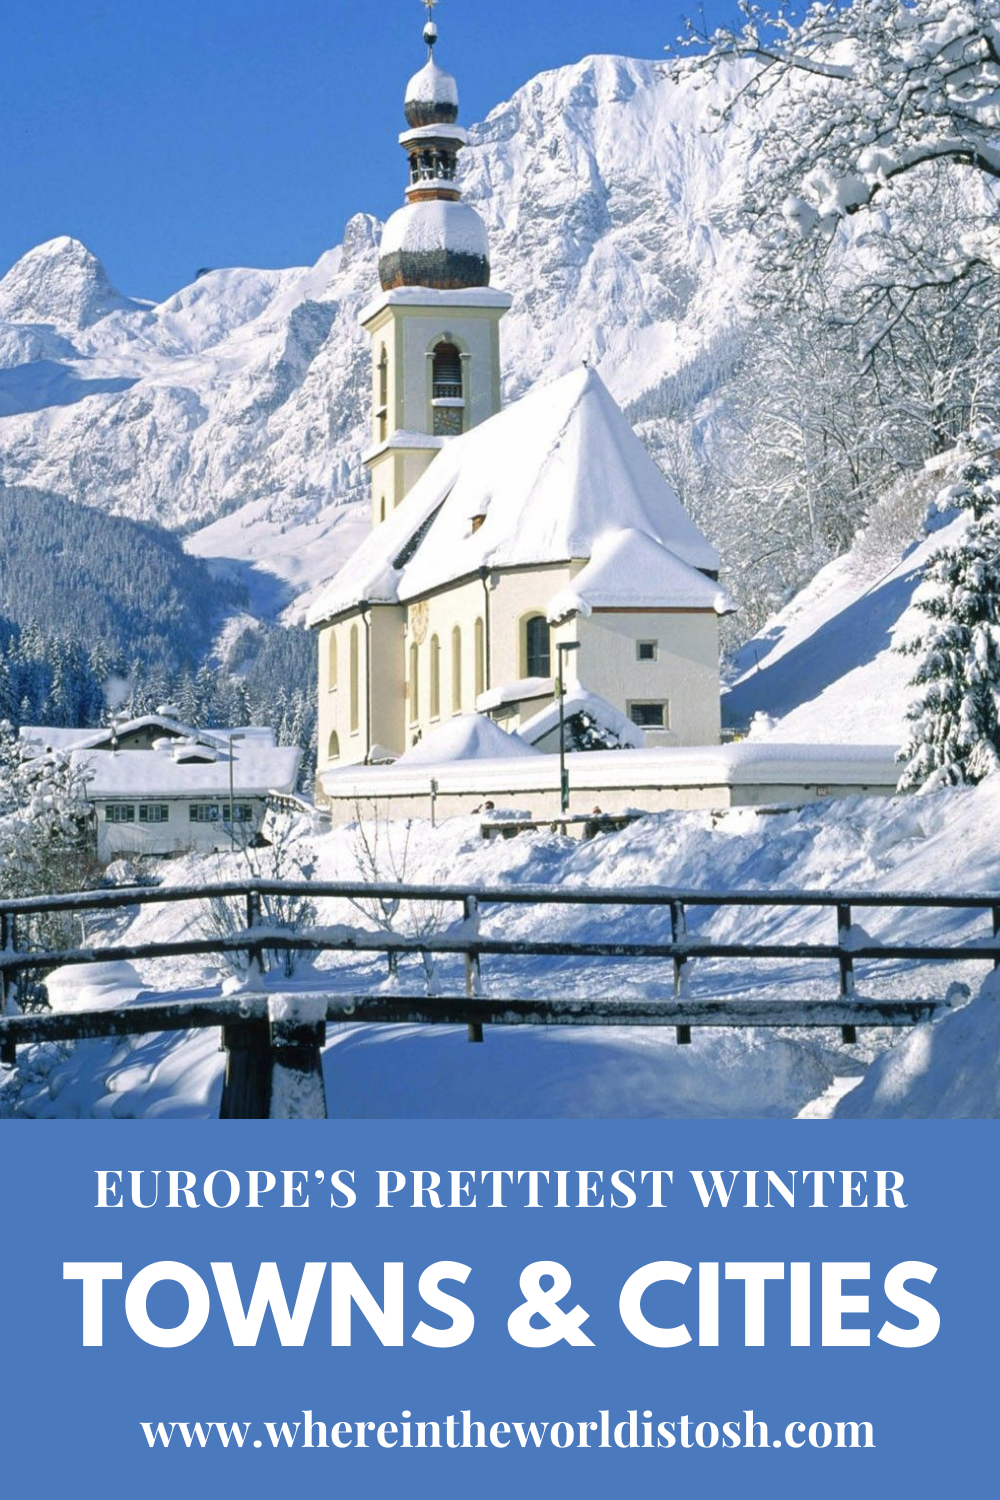 Europe's Prettiest Winter Towns & Cities